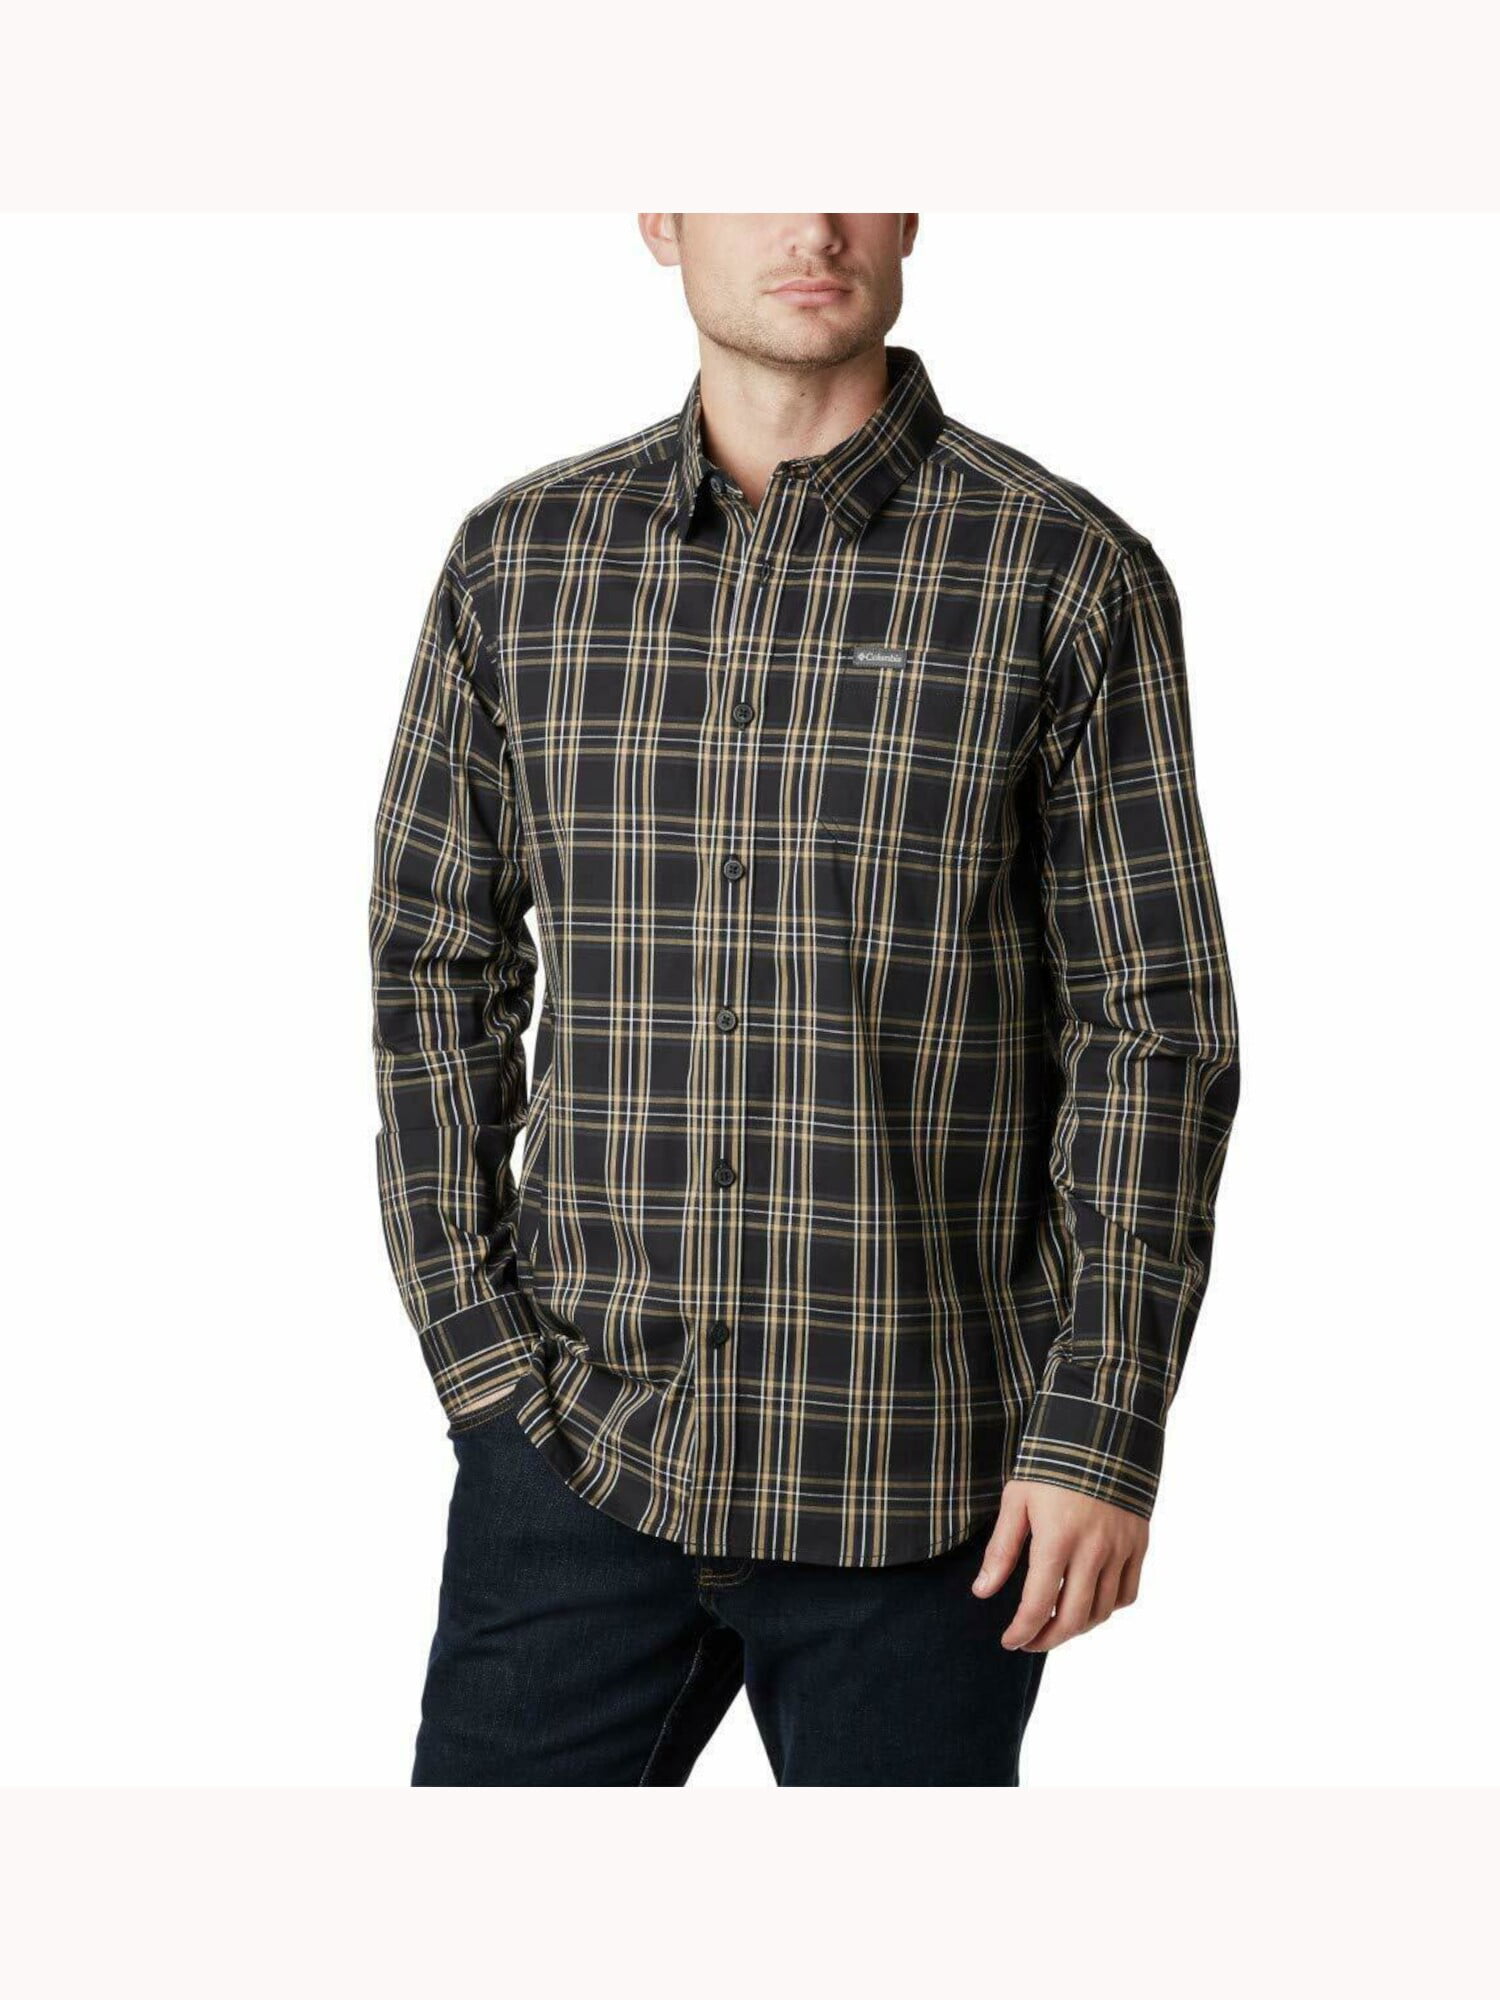 COLUMBIA Mens Black Plaid Collared Classic Shirt XL - Walmart.com